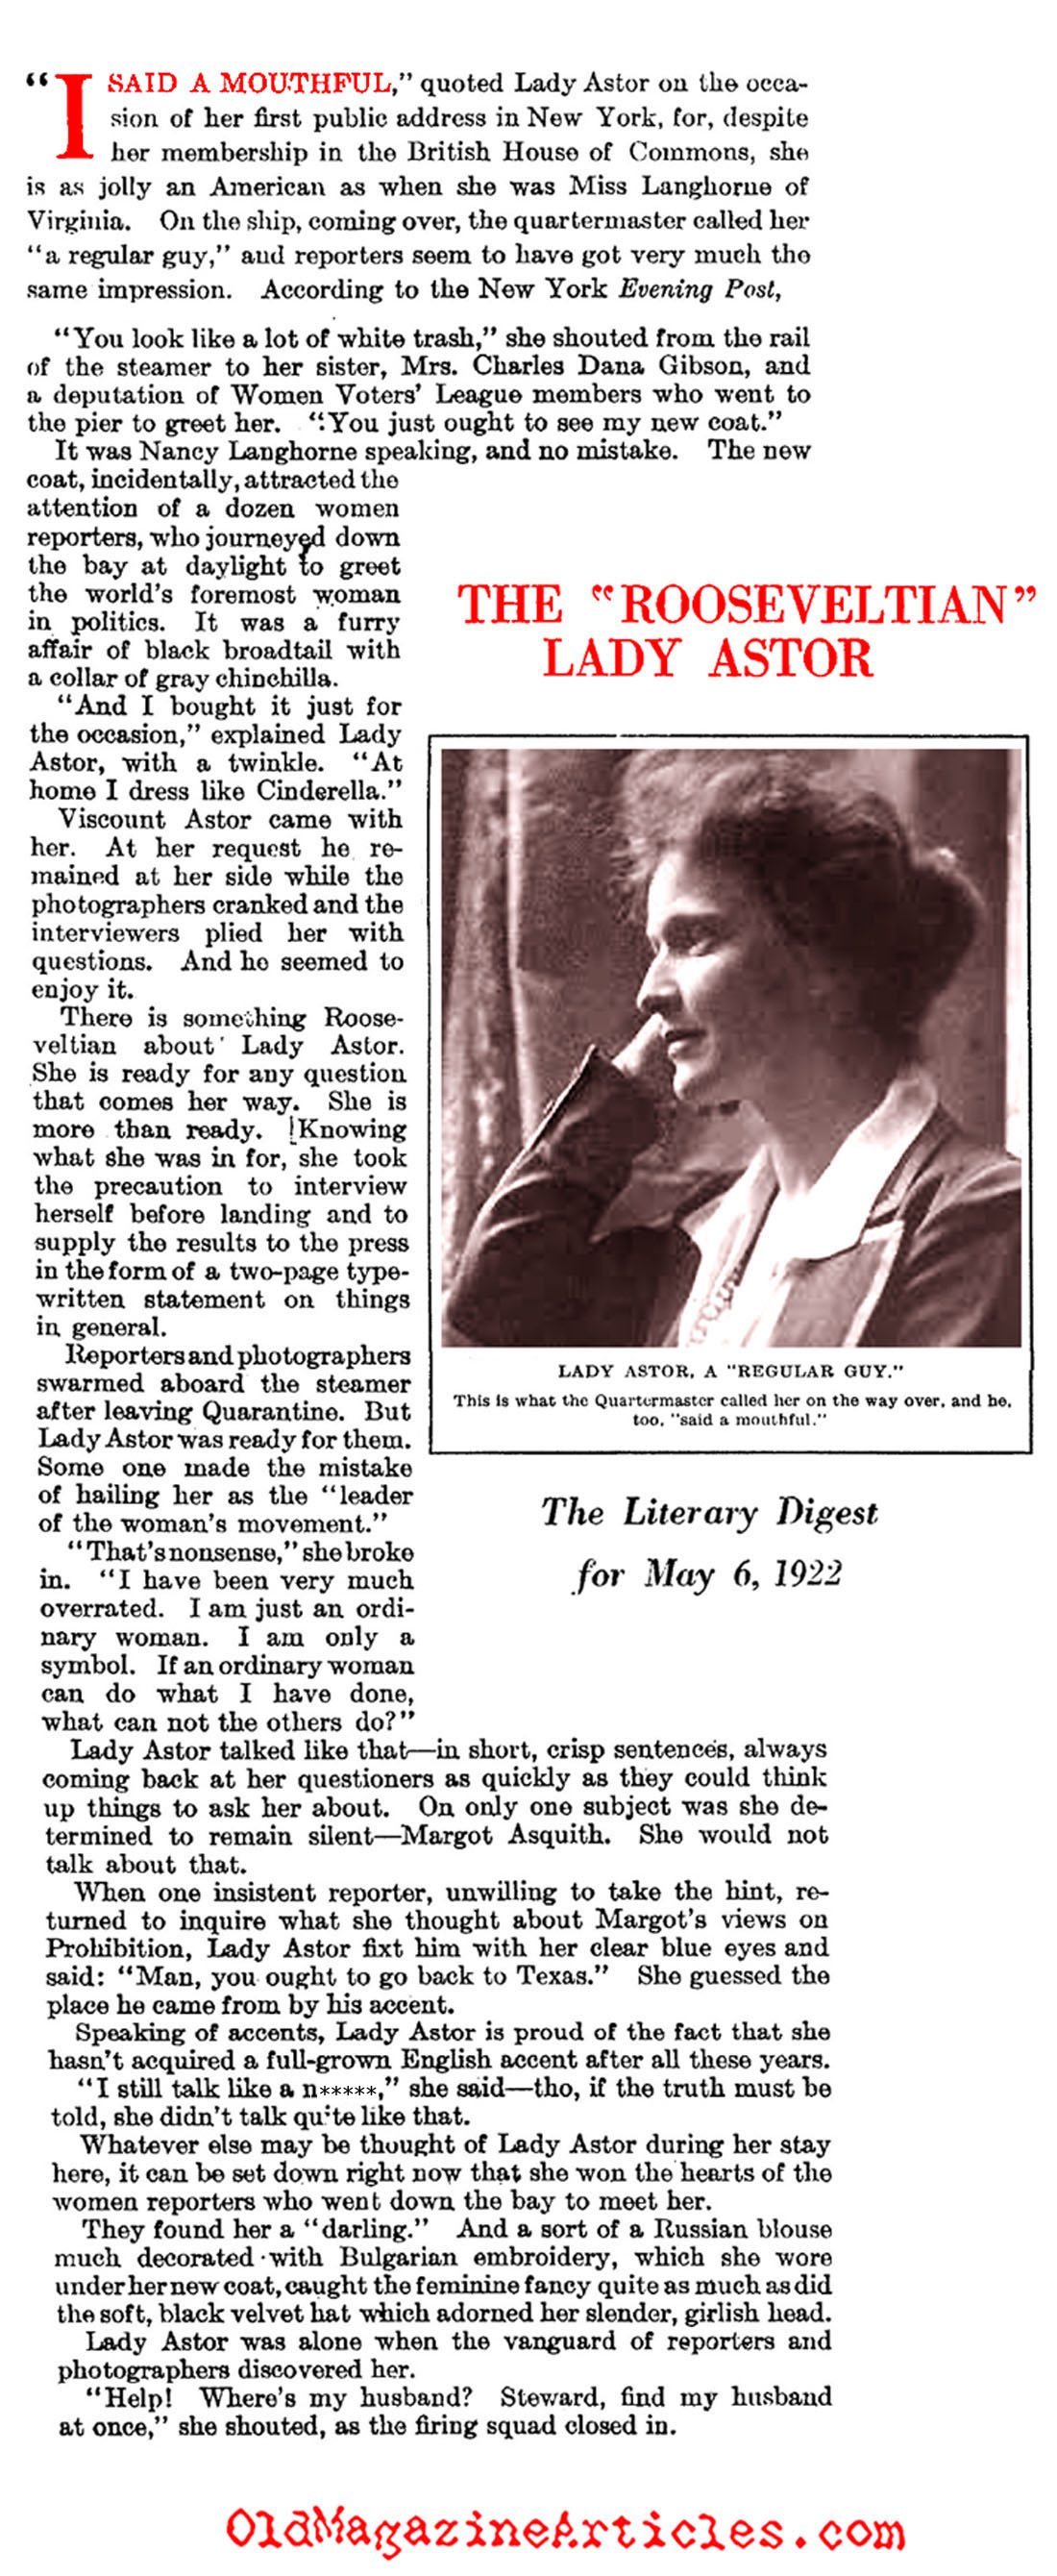 Nancy Langhorne Astor, M.P. (Literary Digest, 1922)